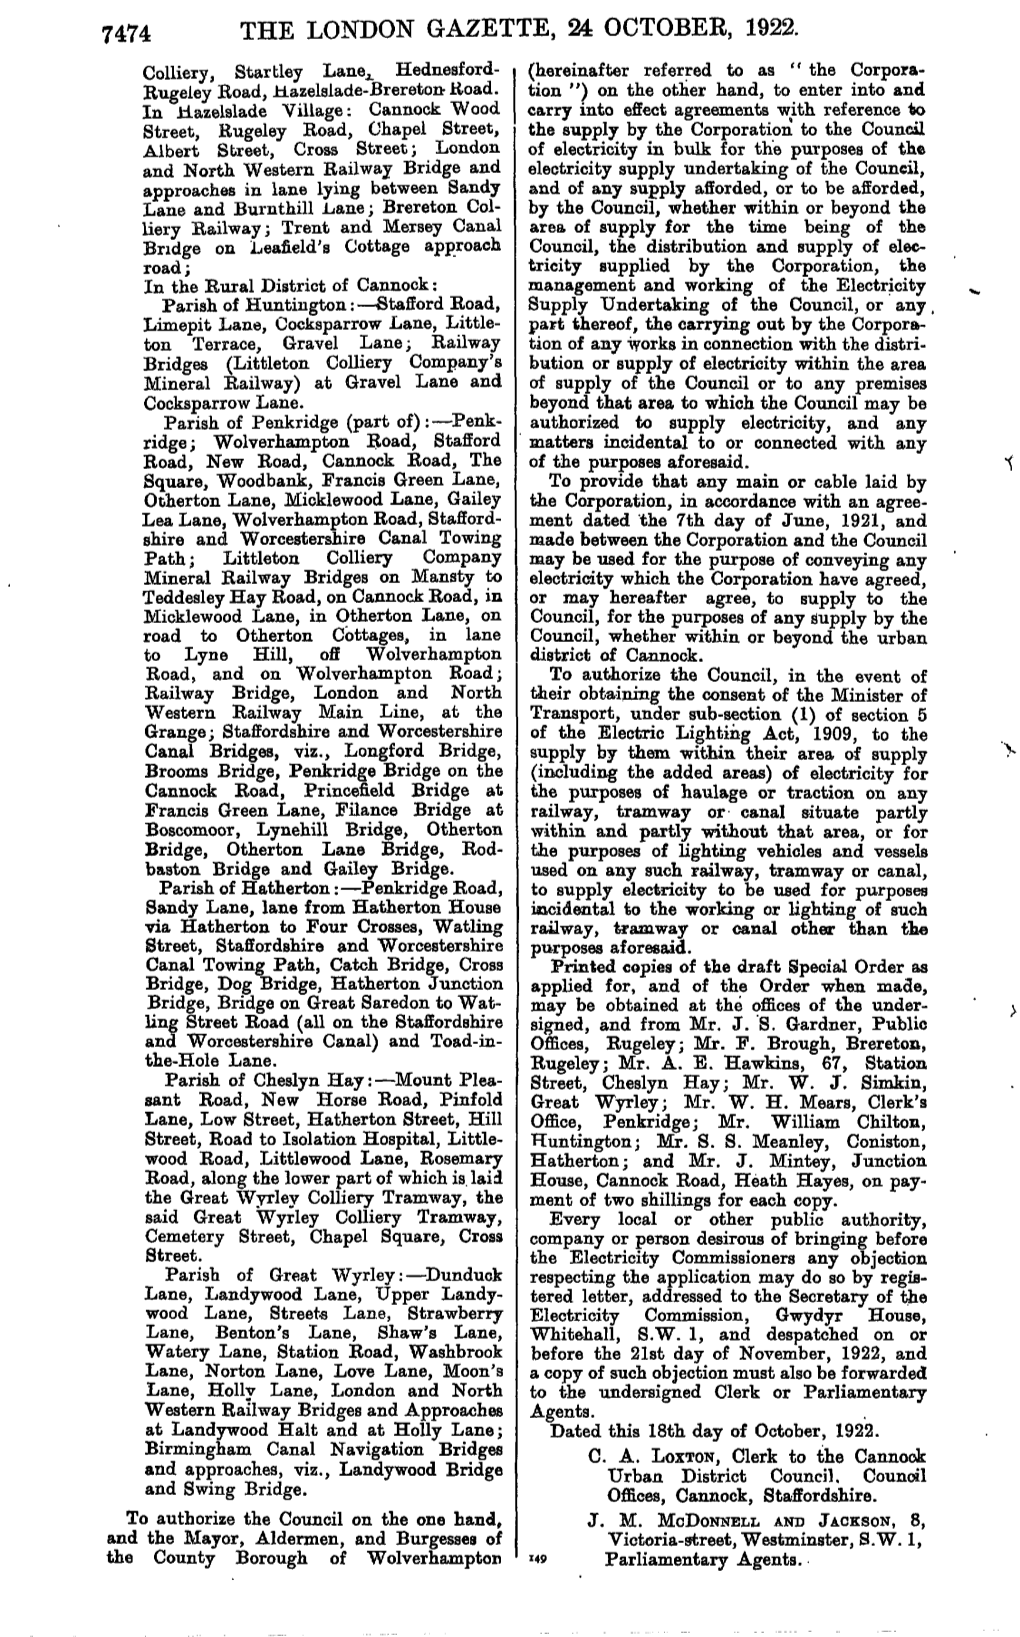 The London Gazette, 24 October, 1922